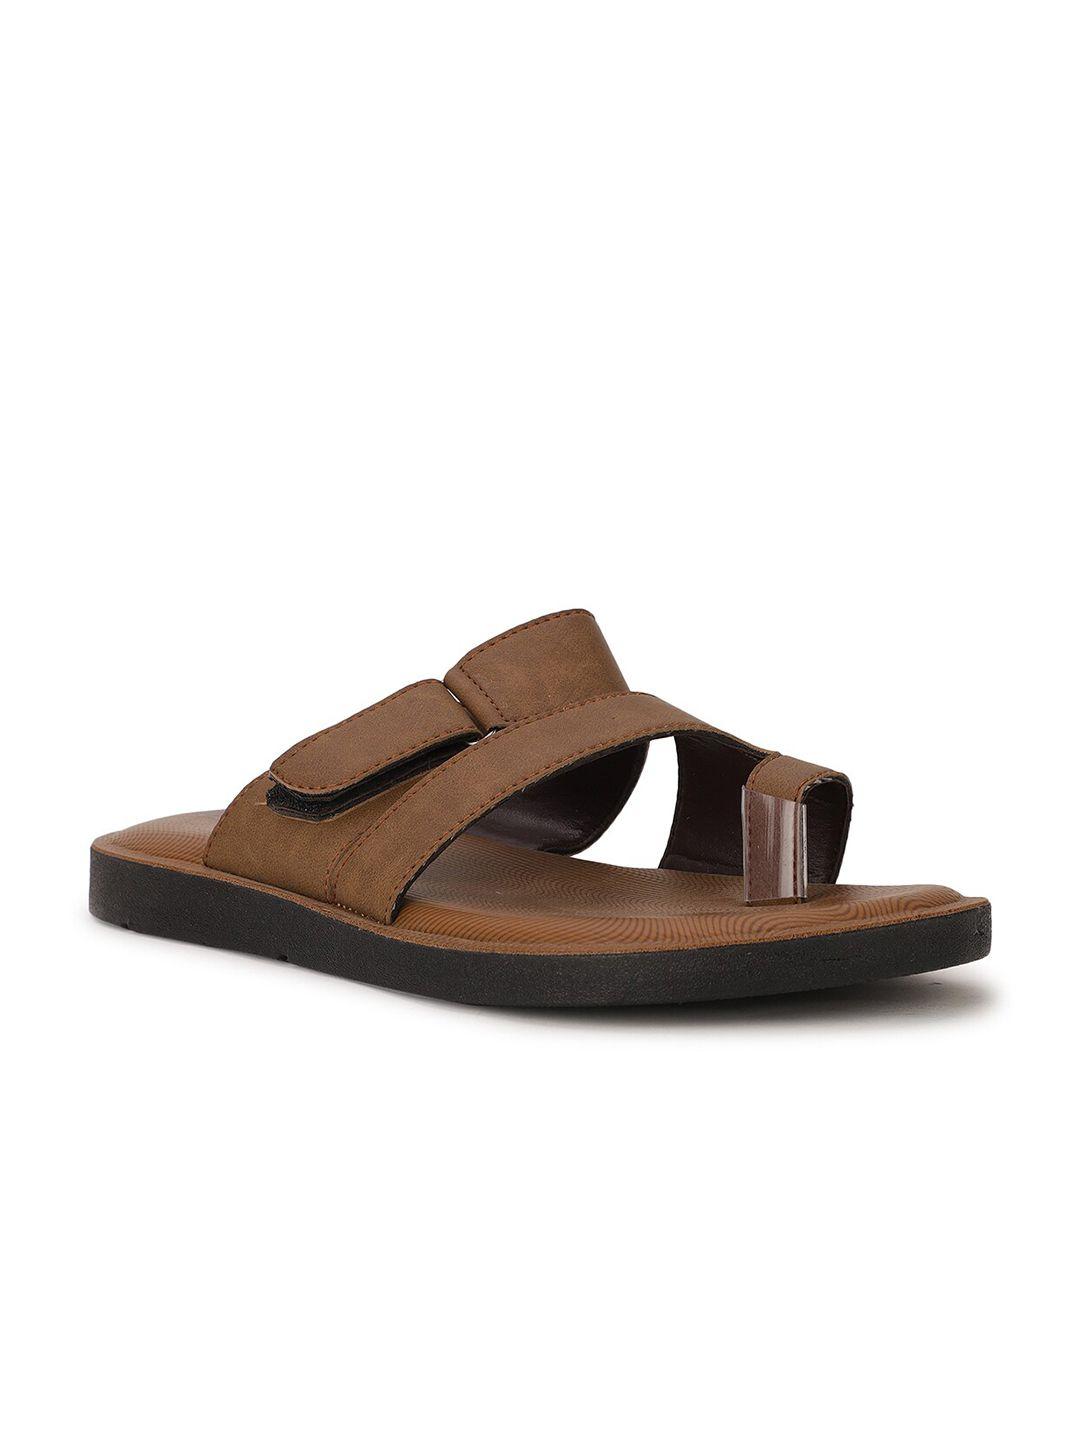 Bata Men Brown PU Slip On Comfort Sandals